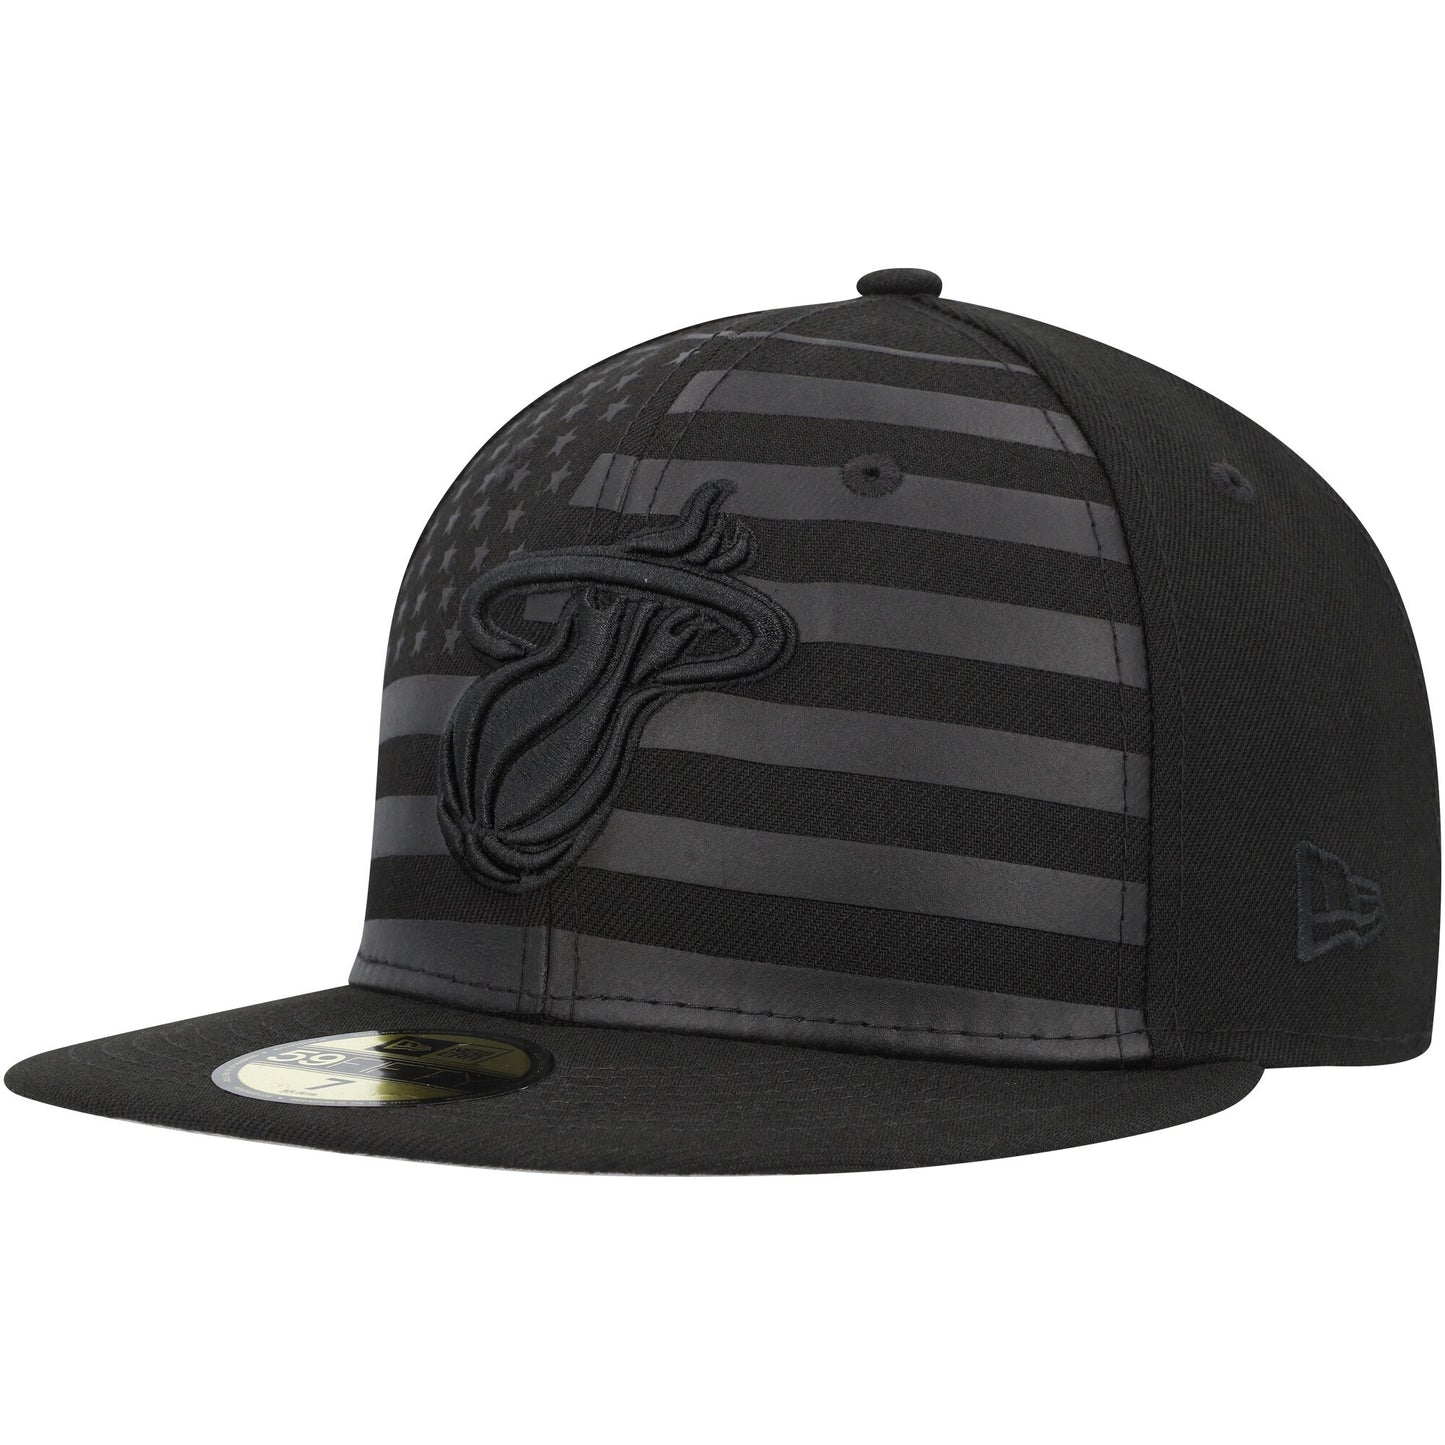 Miami Heat New Era Black on Black Tonal Flag 59FIFTY Fitted Hat